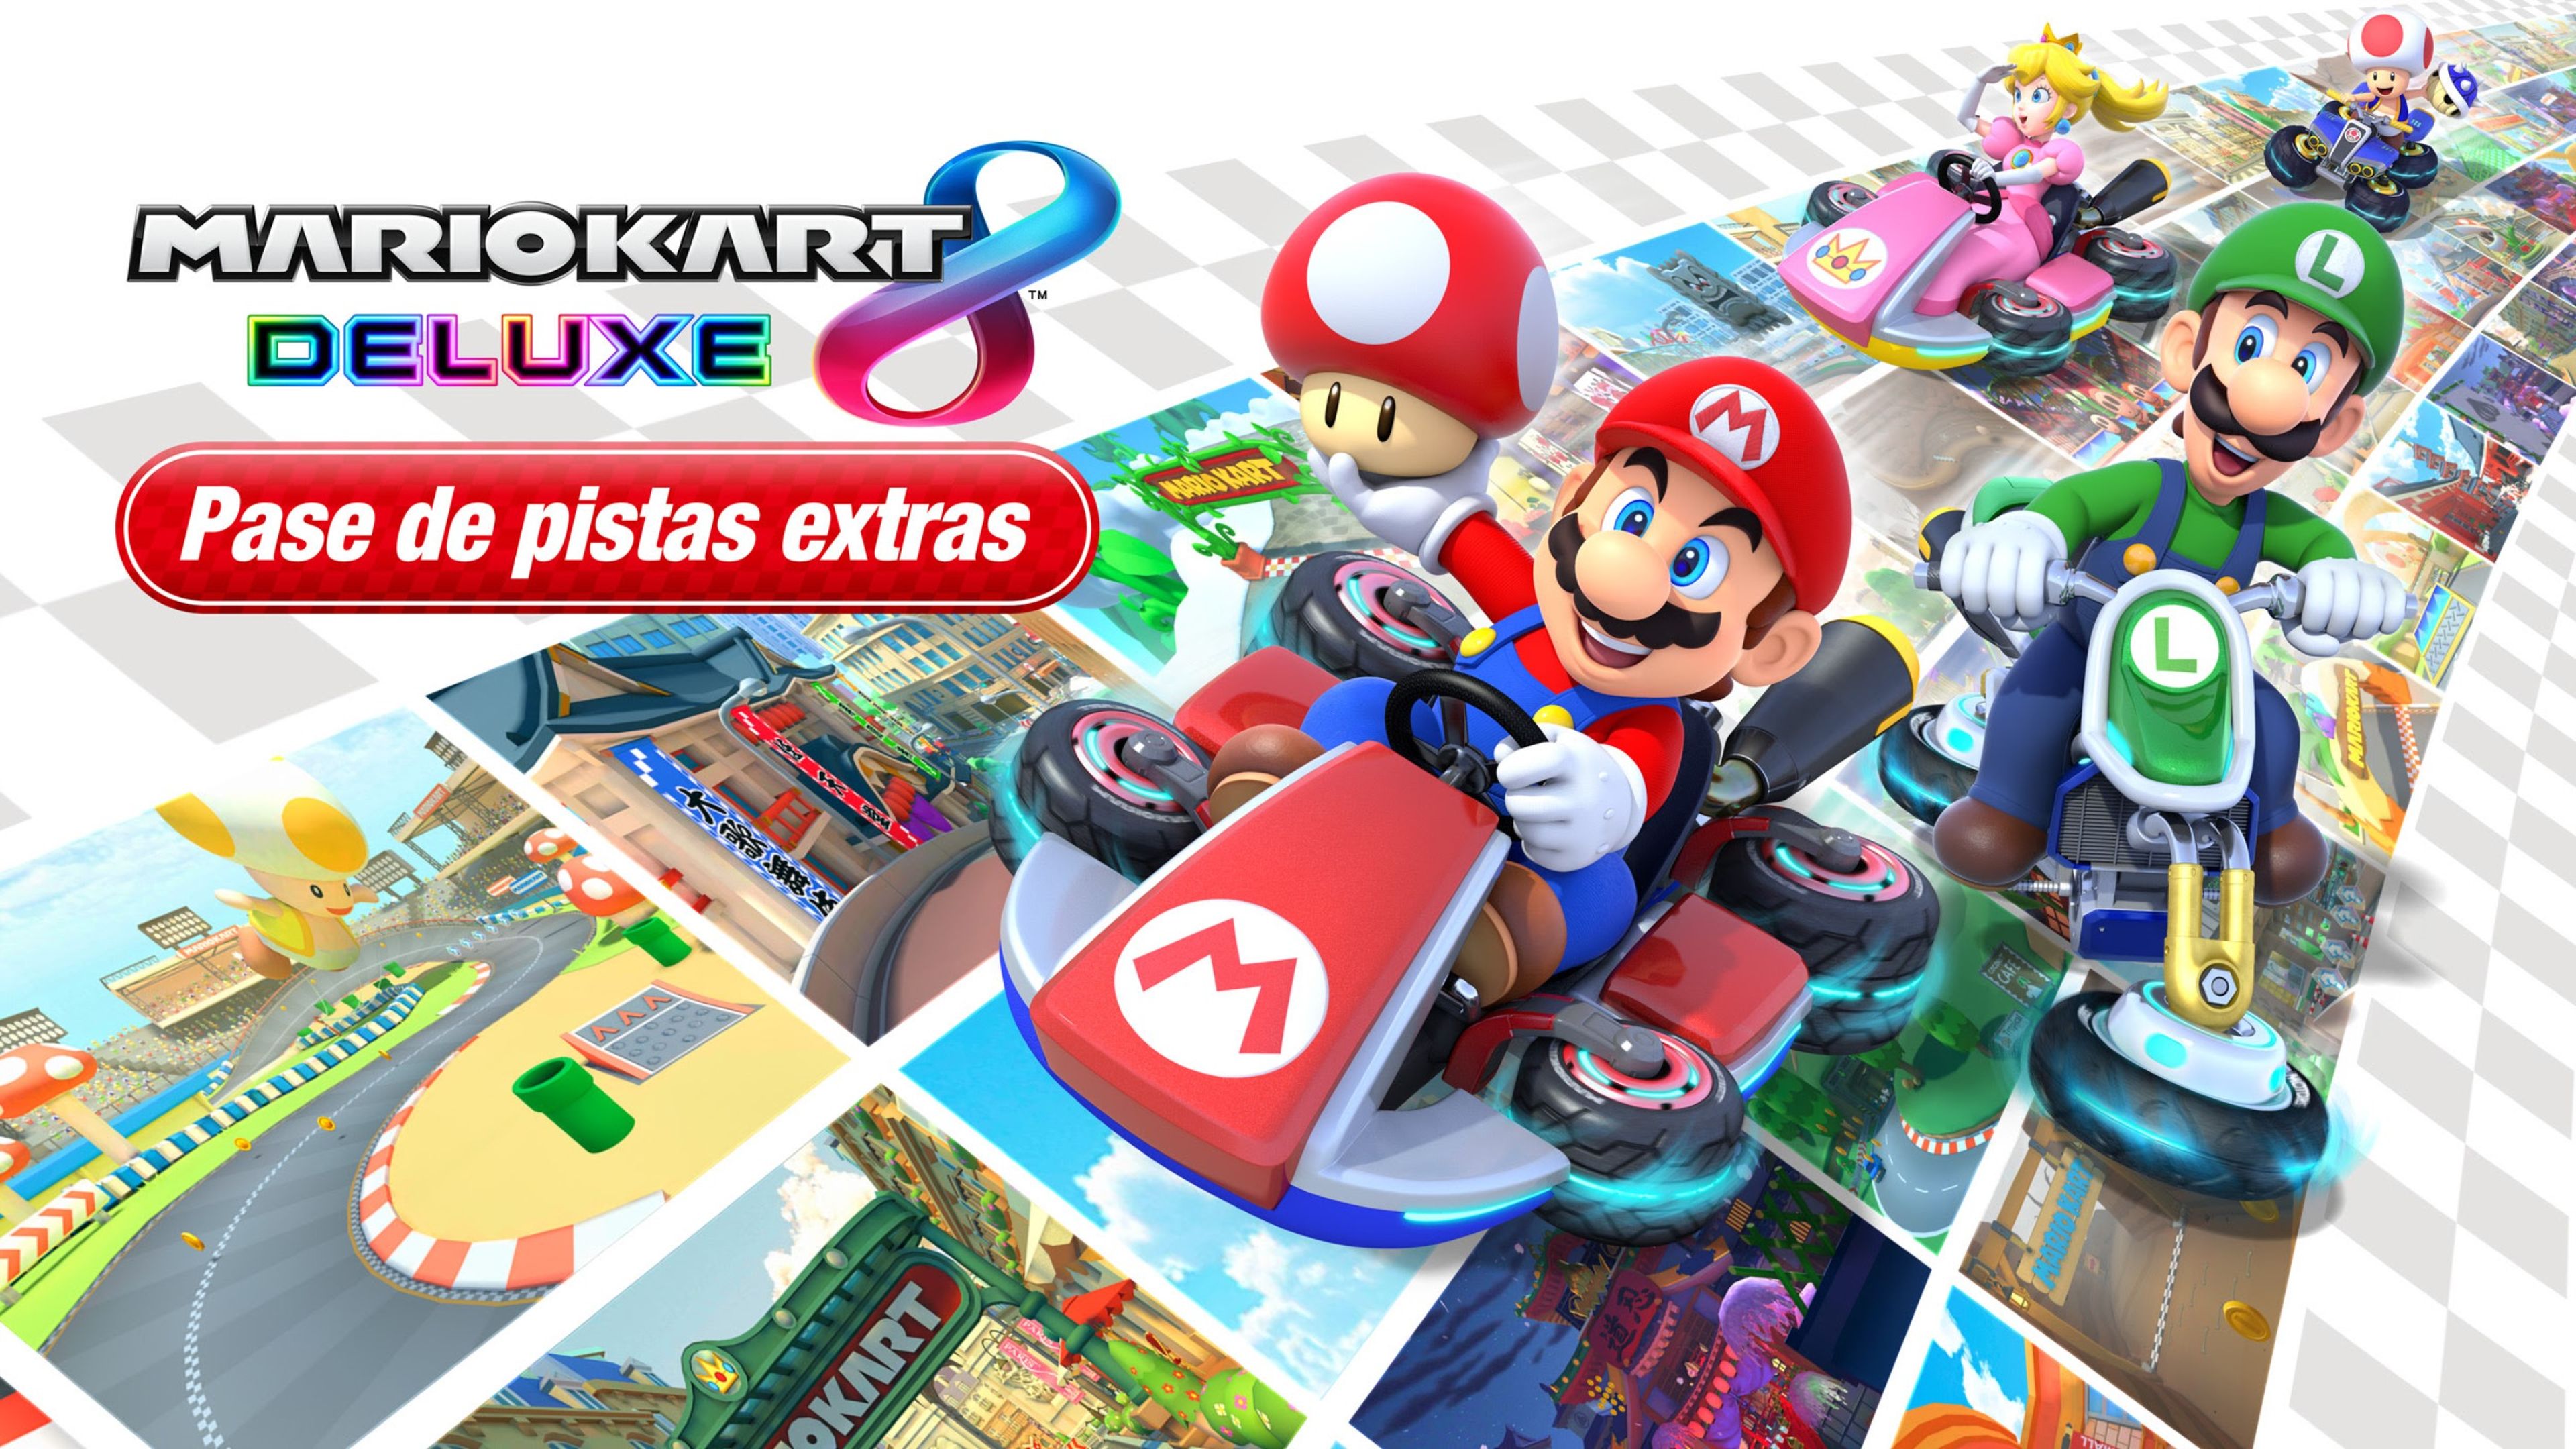 Mario Kart 8 Deluxe - Pase de pistas extras